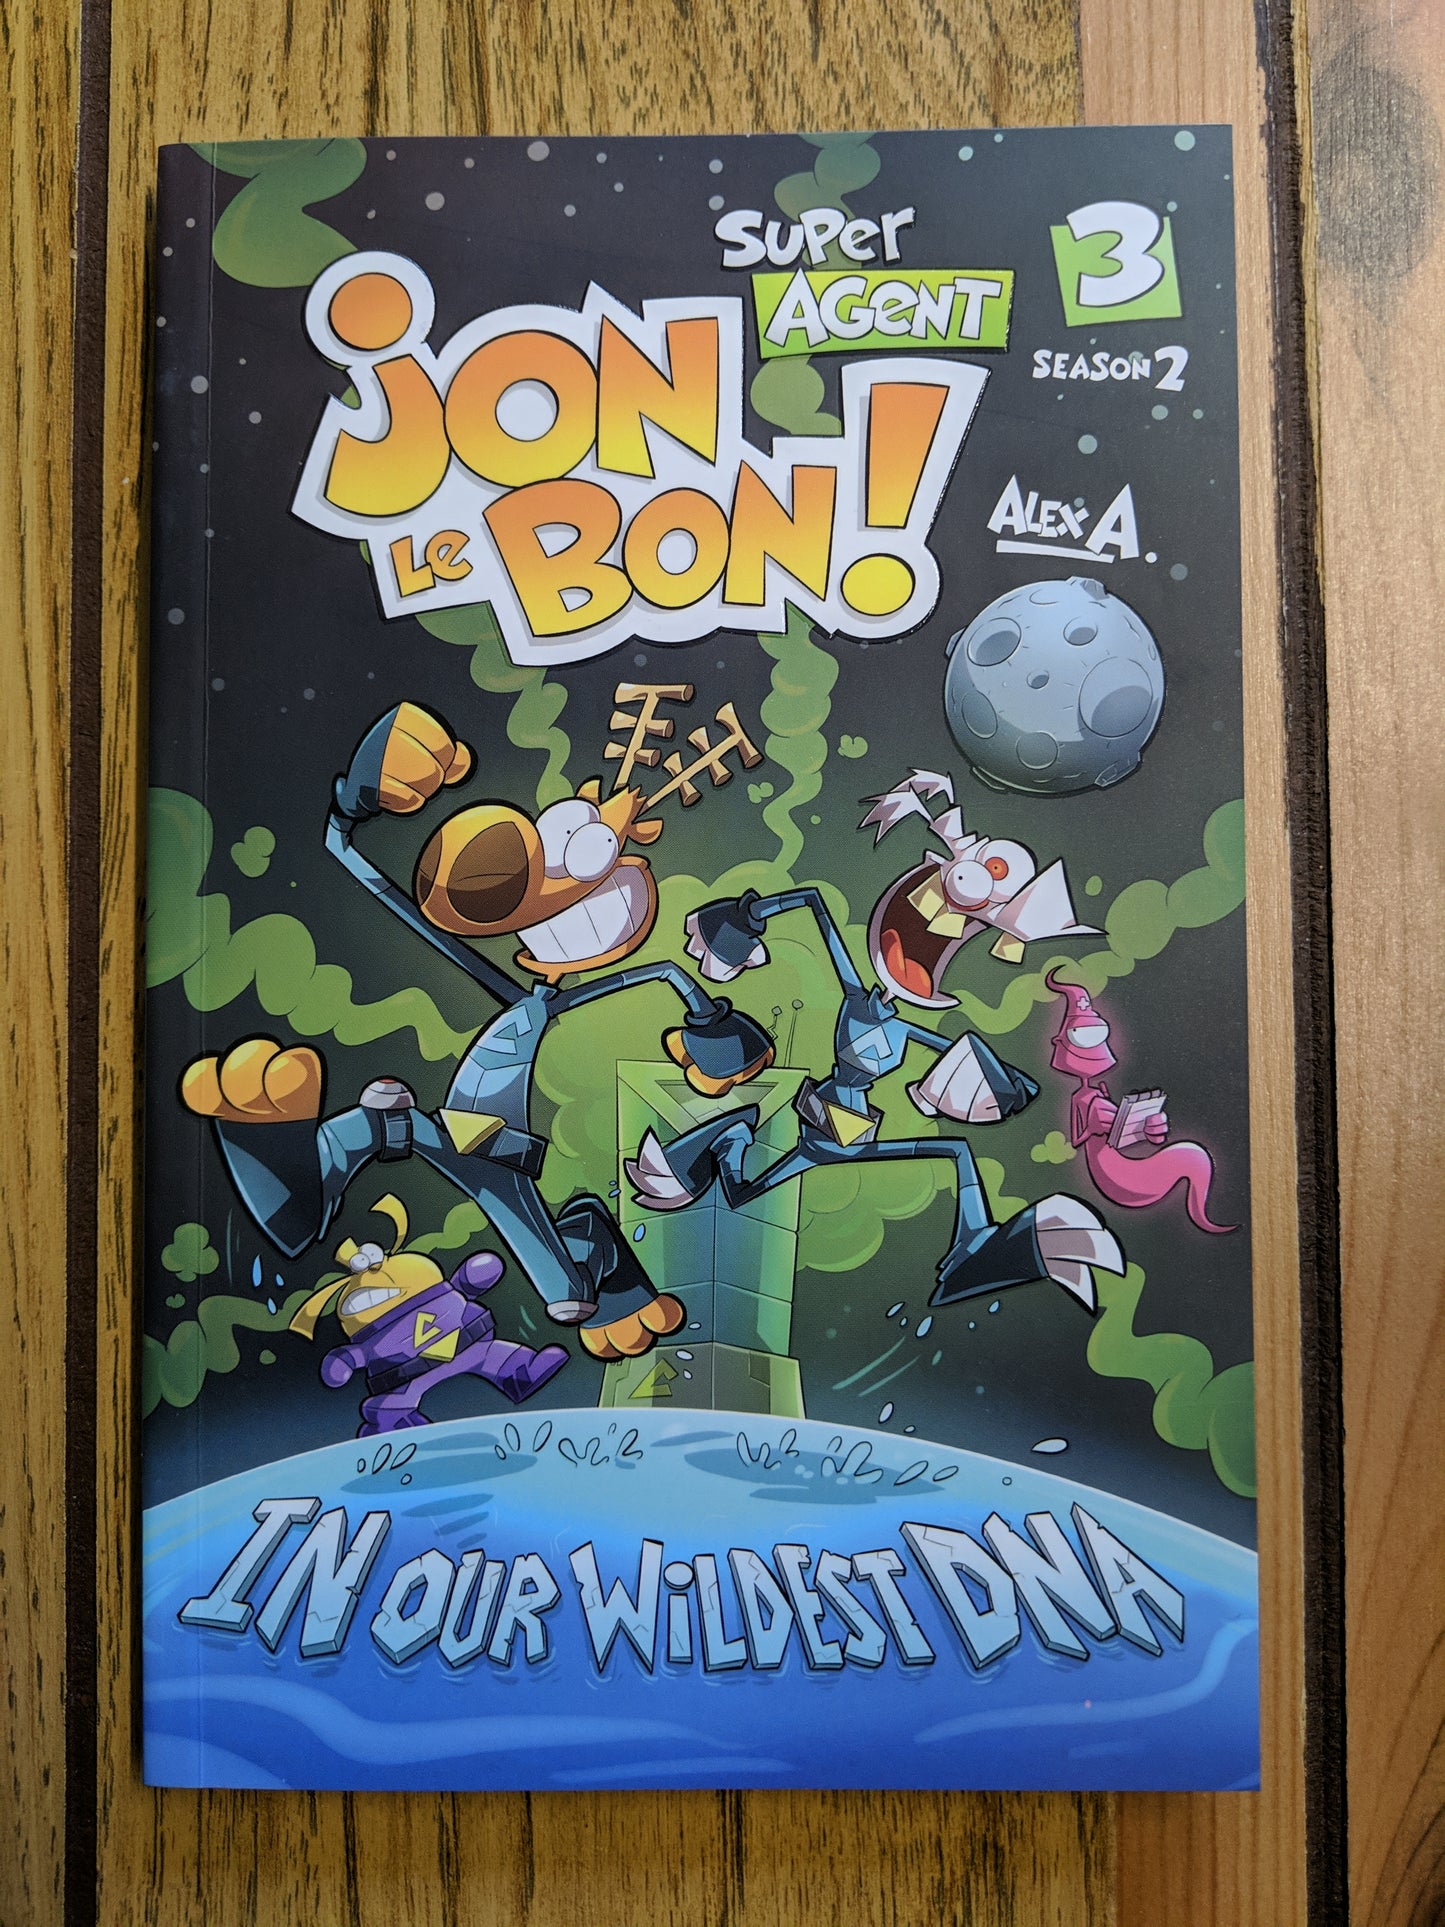 Super Agent Jon Le Bon! Season 2 #3: In Our Wildest DNA